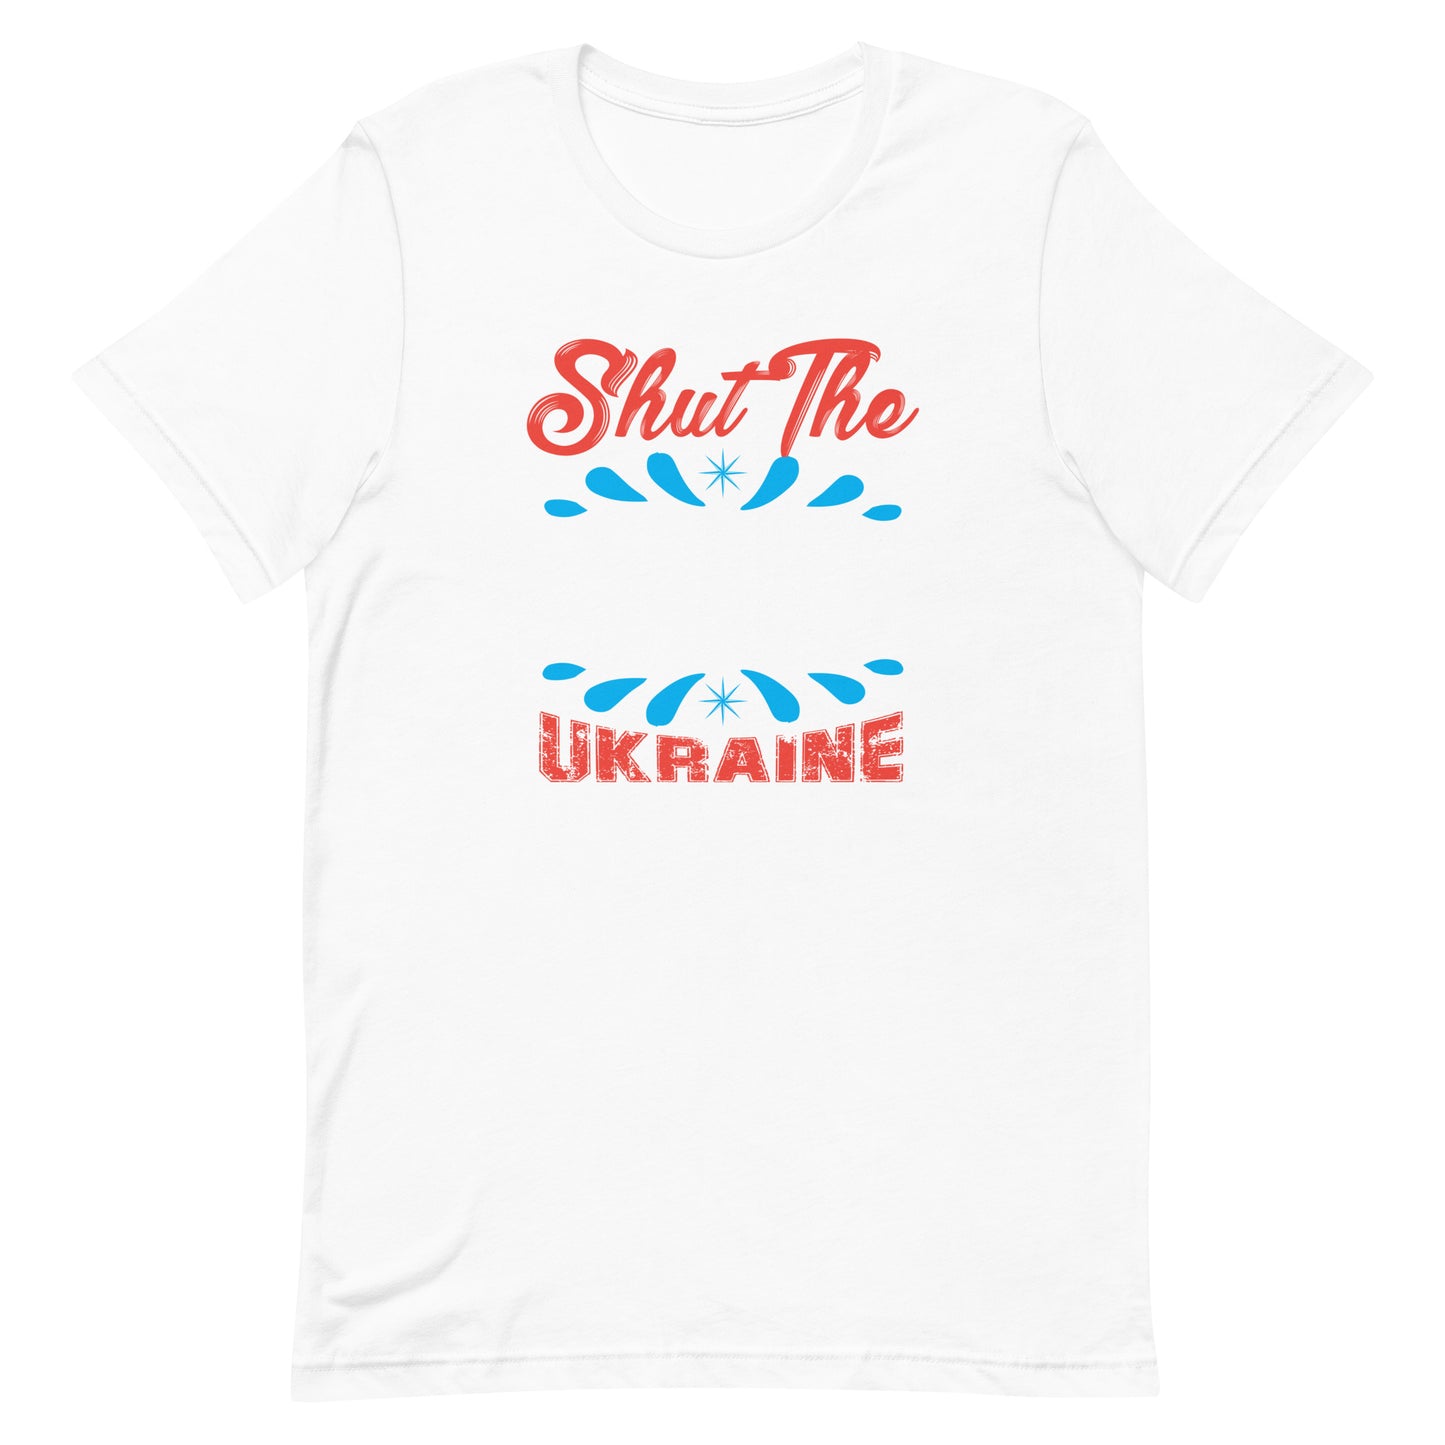 Shut The Sky Save Ukraine | Unisex t-shirt